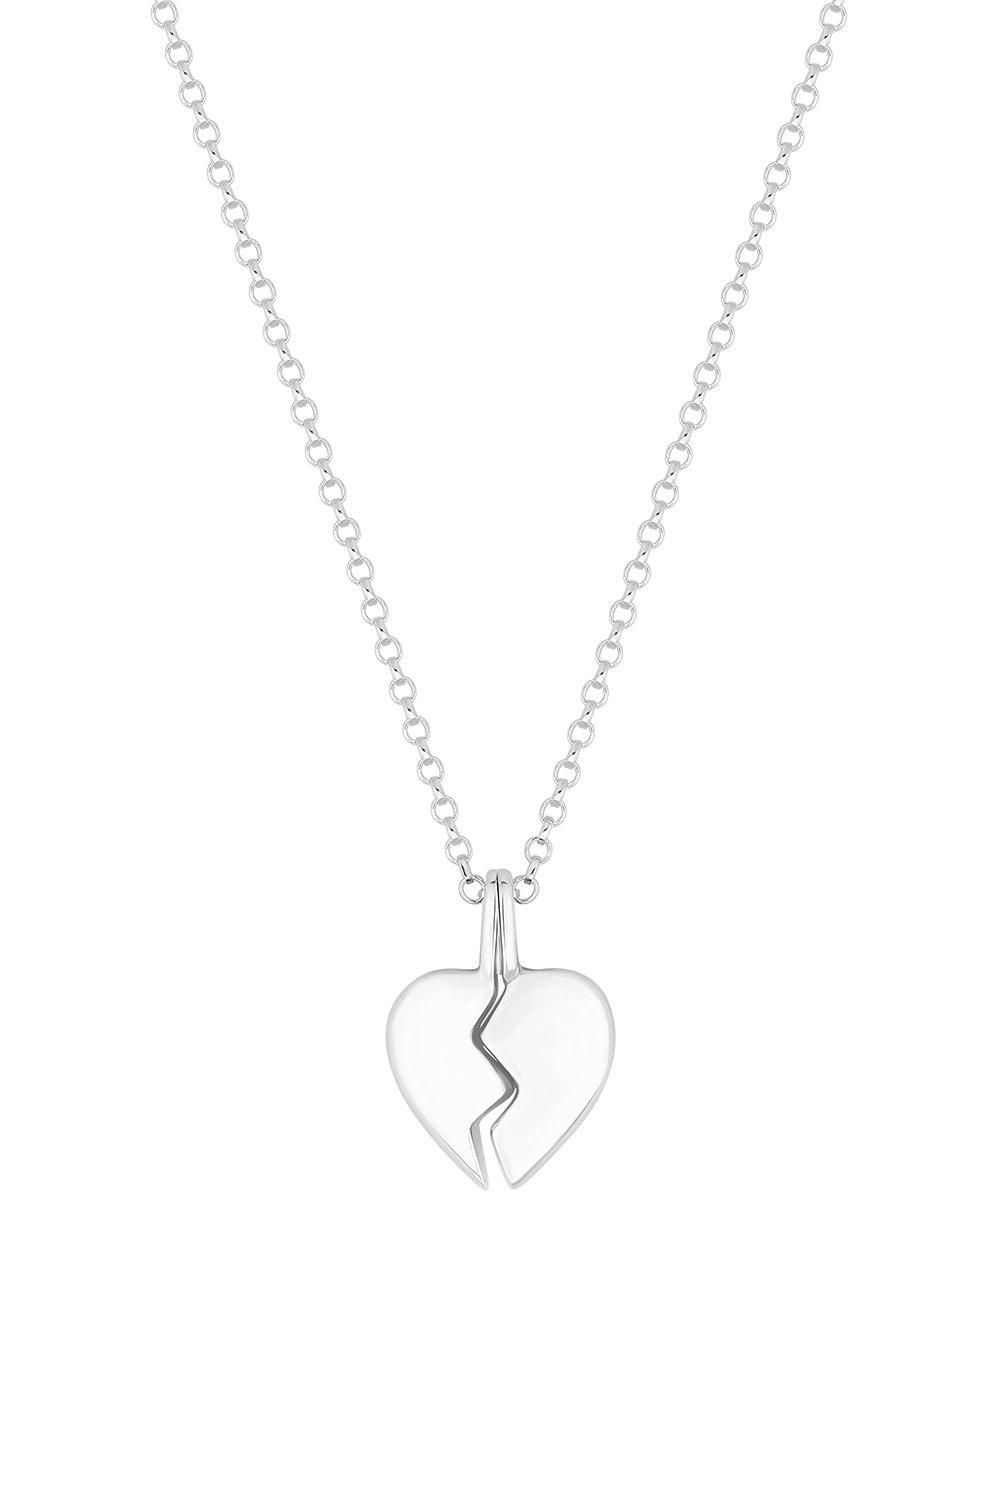 Jewellery | Sterling Silver 925 Broken Heart Pendant Necklace | Simply ...